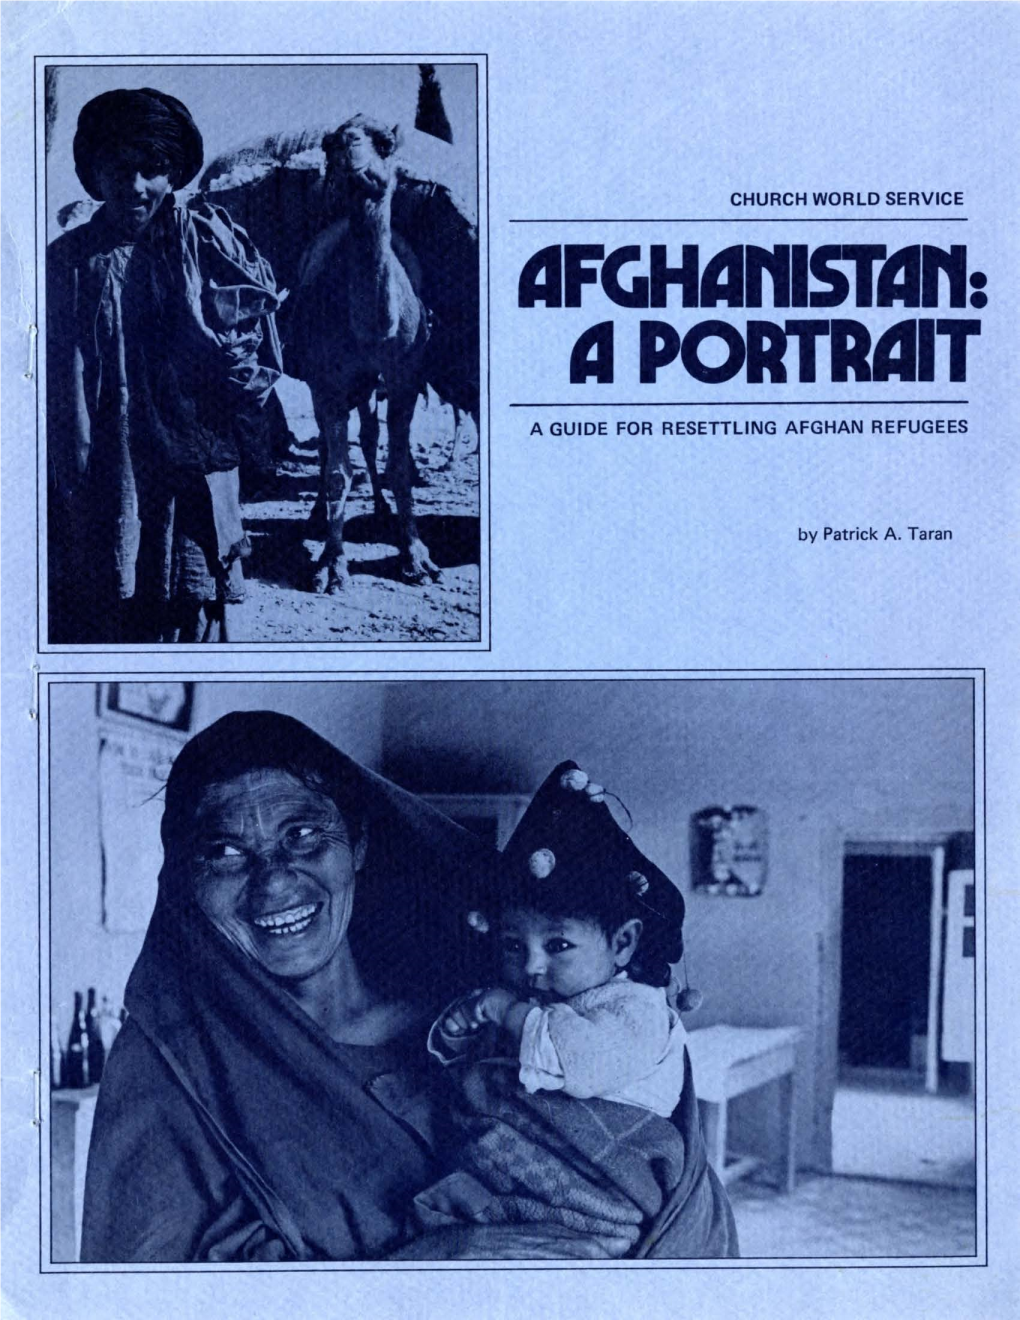 Afghan1smn: D Portadlt